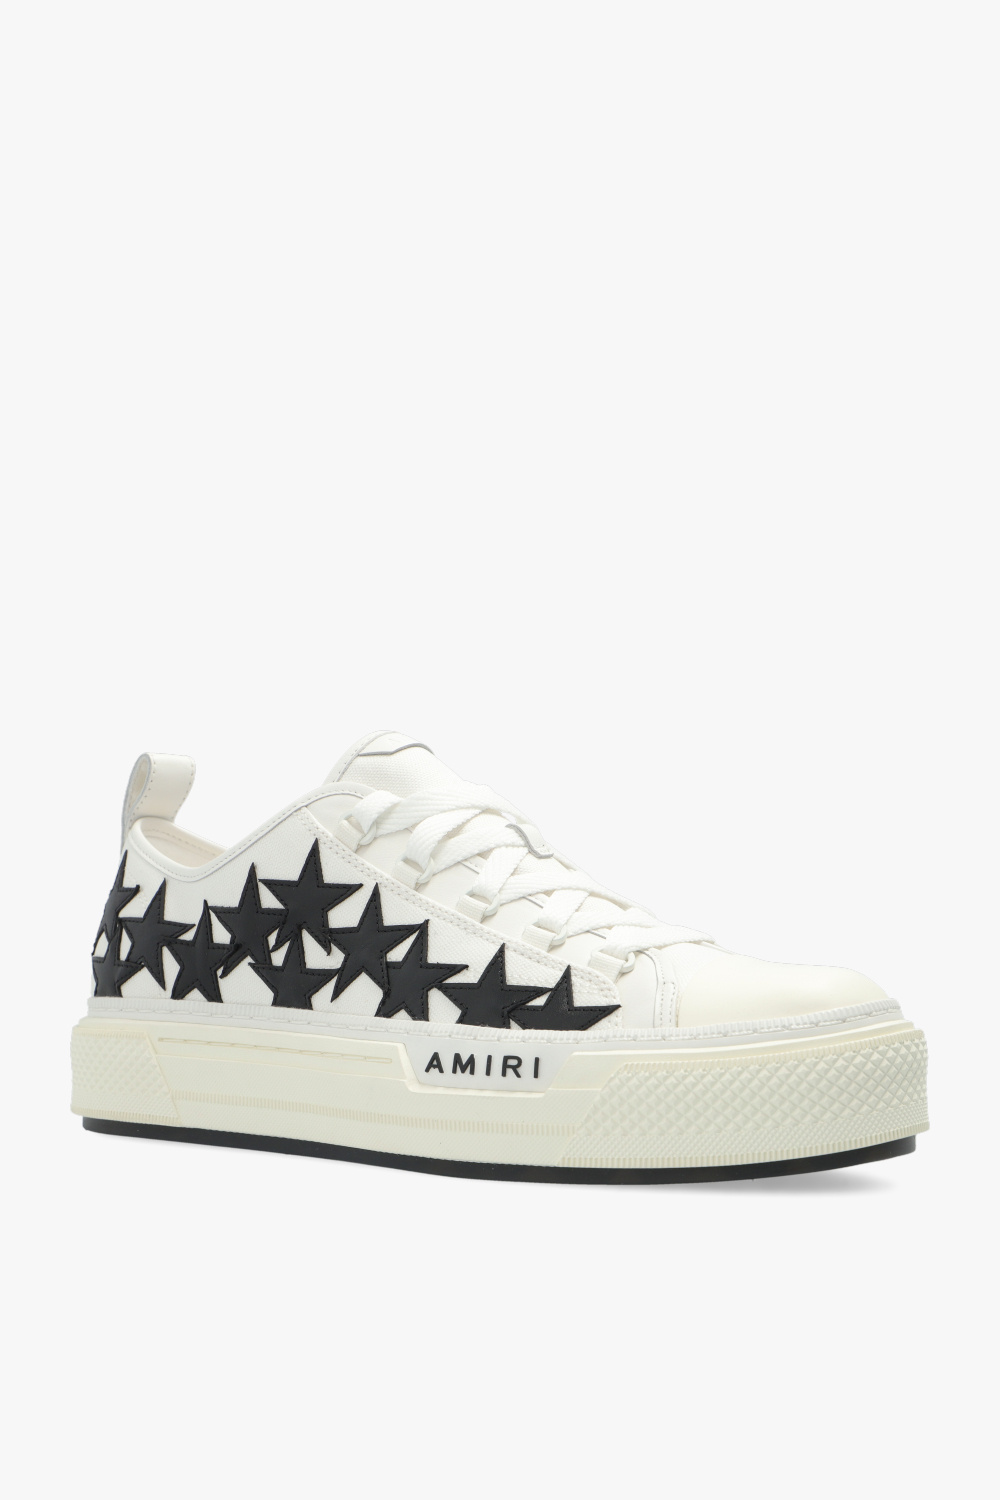 Amiri ‘Stars Court’ sneakers | Men's Shoes | Vitkac